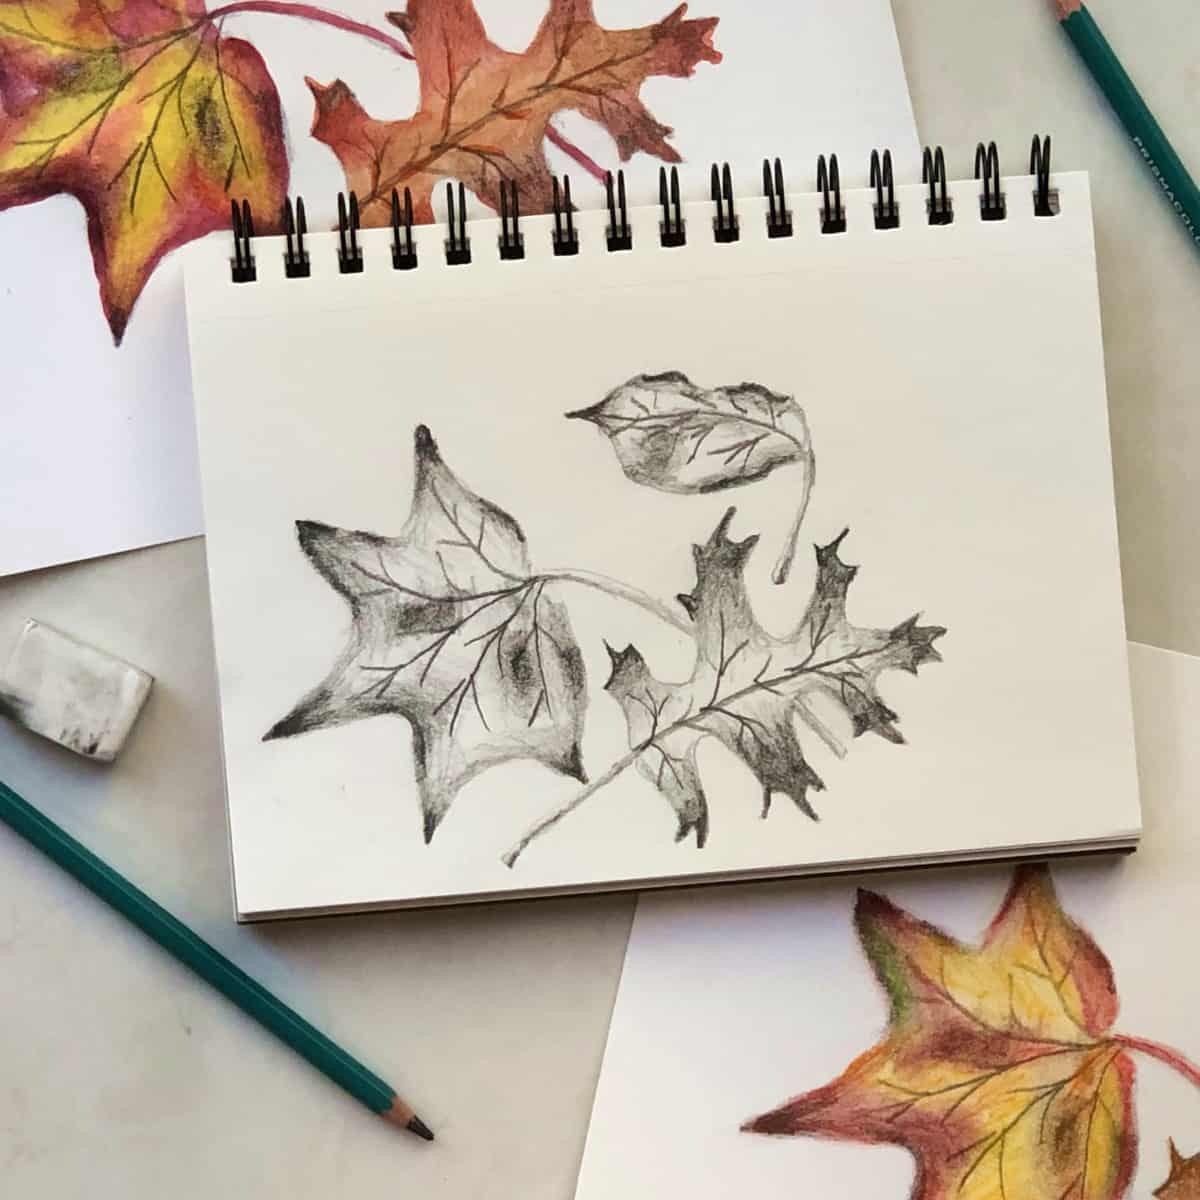 Autumn Leaf Drawing - Free Stock Photo by Nika Akin on Stockvault.net